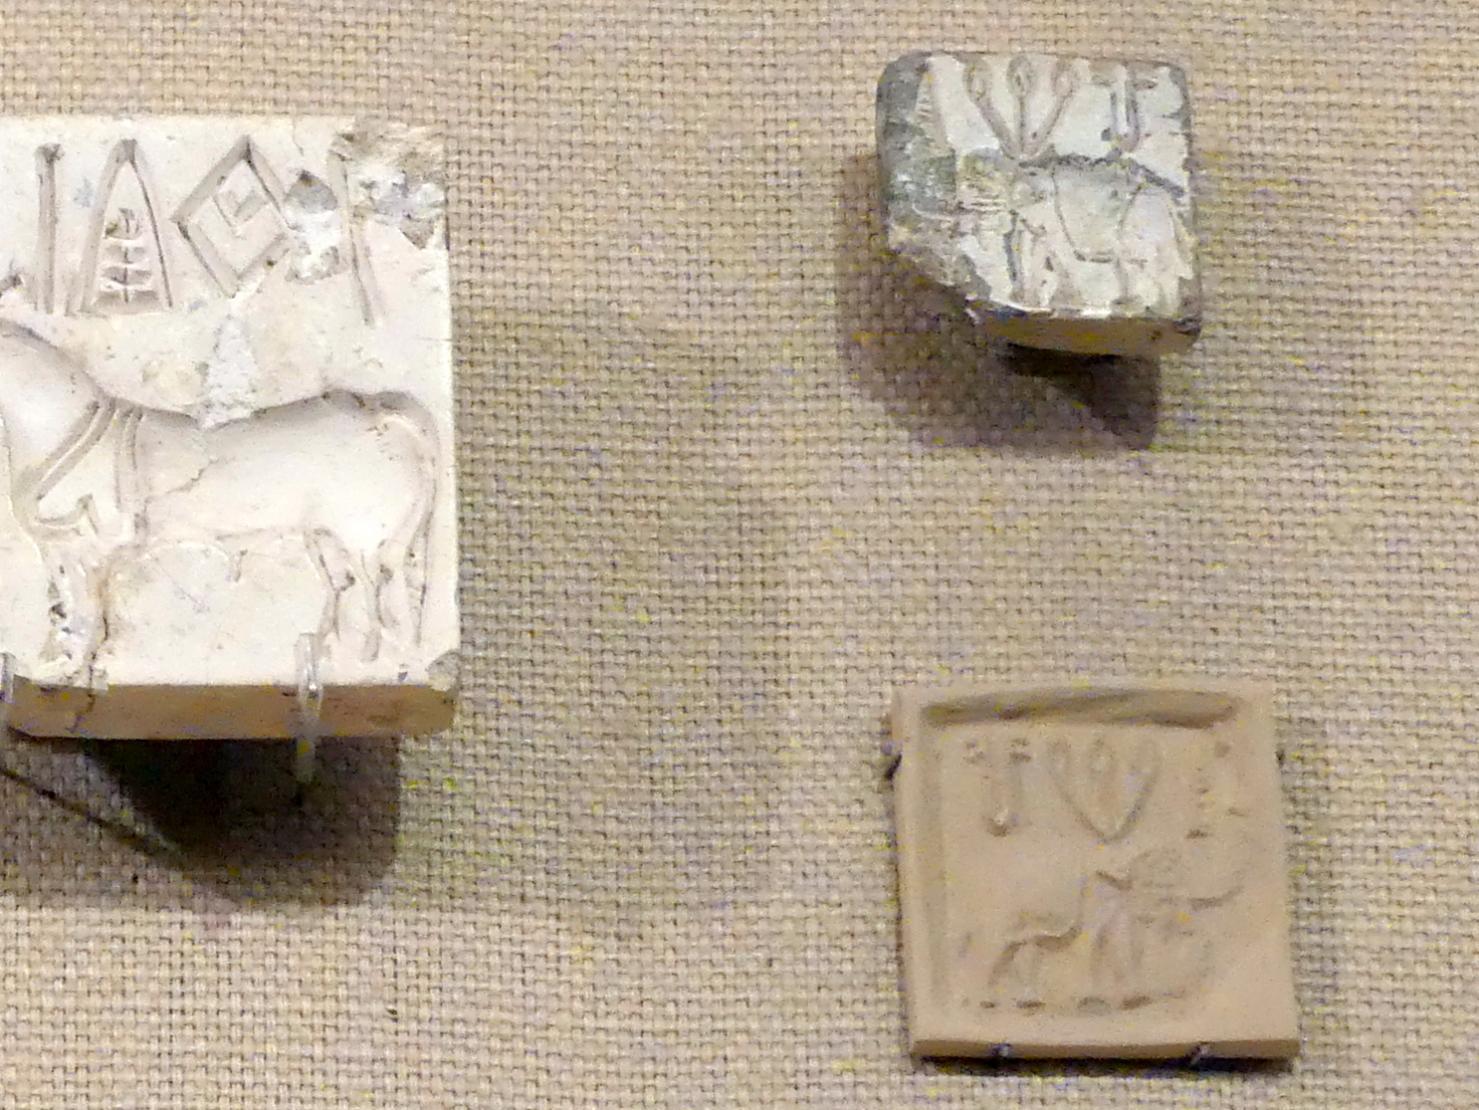 Stempelsiegel und moderner Abdruck: Elefant, Harappan 3, 2600 - 1900 v. Chr., 2600 - 1900 v. Chr.